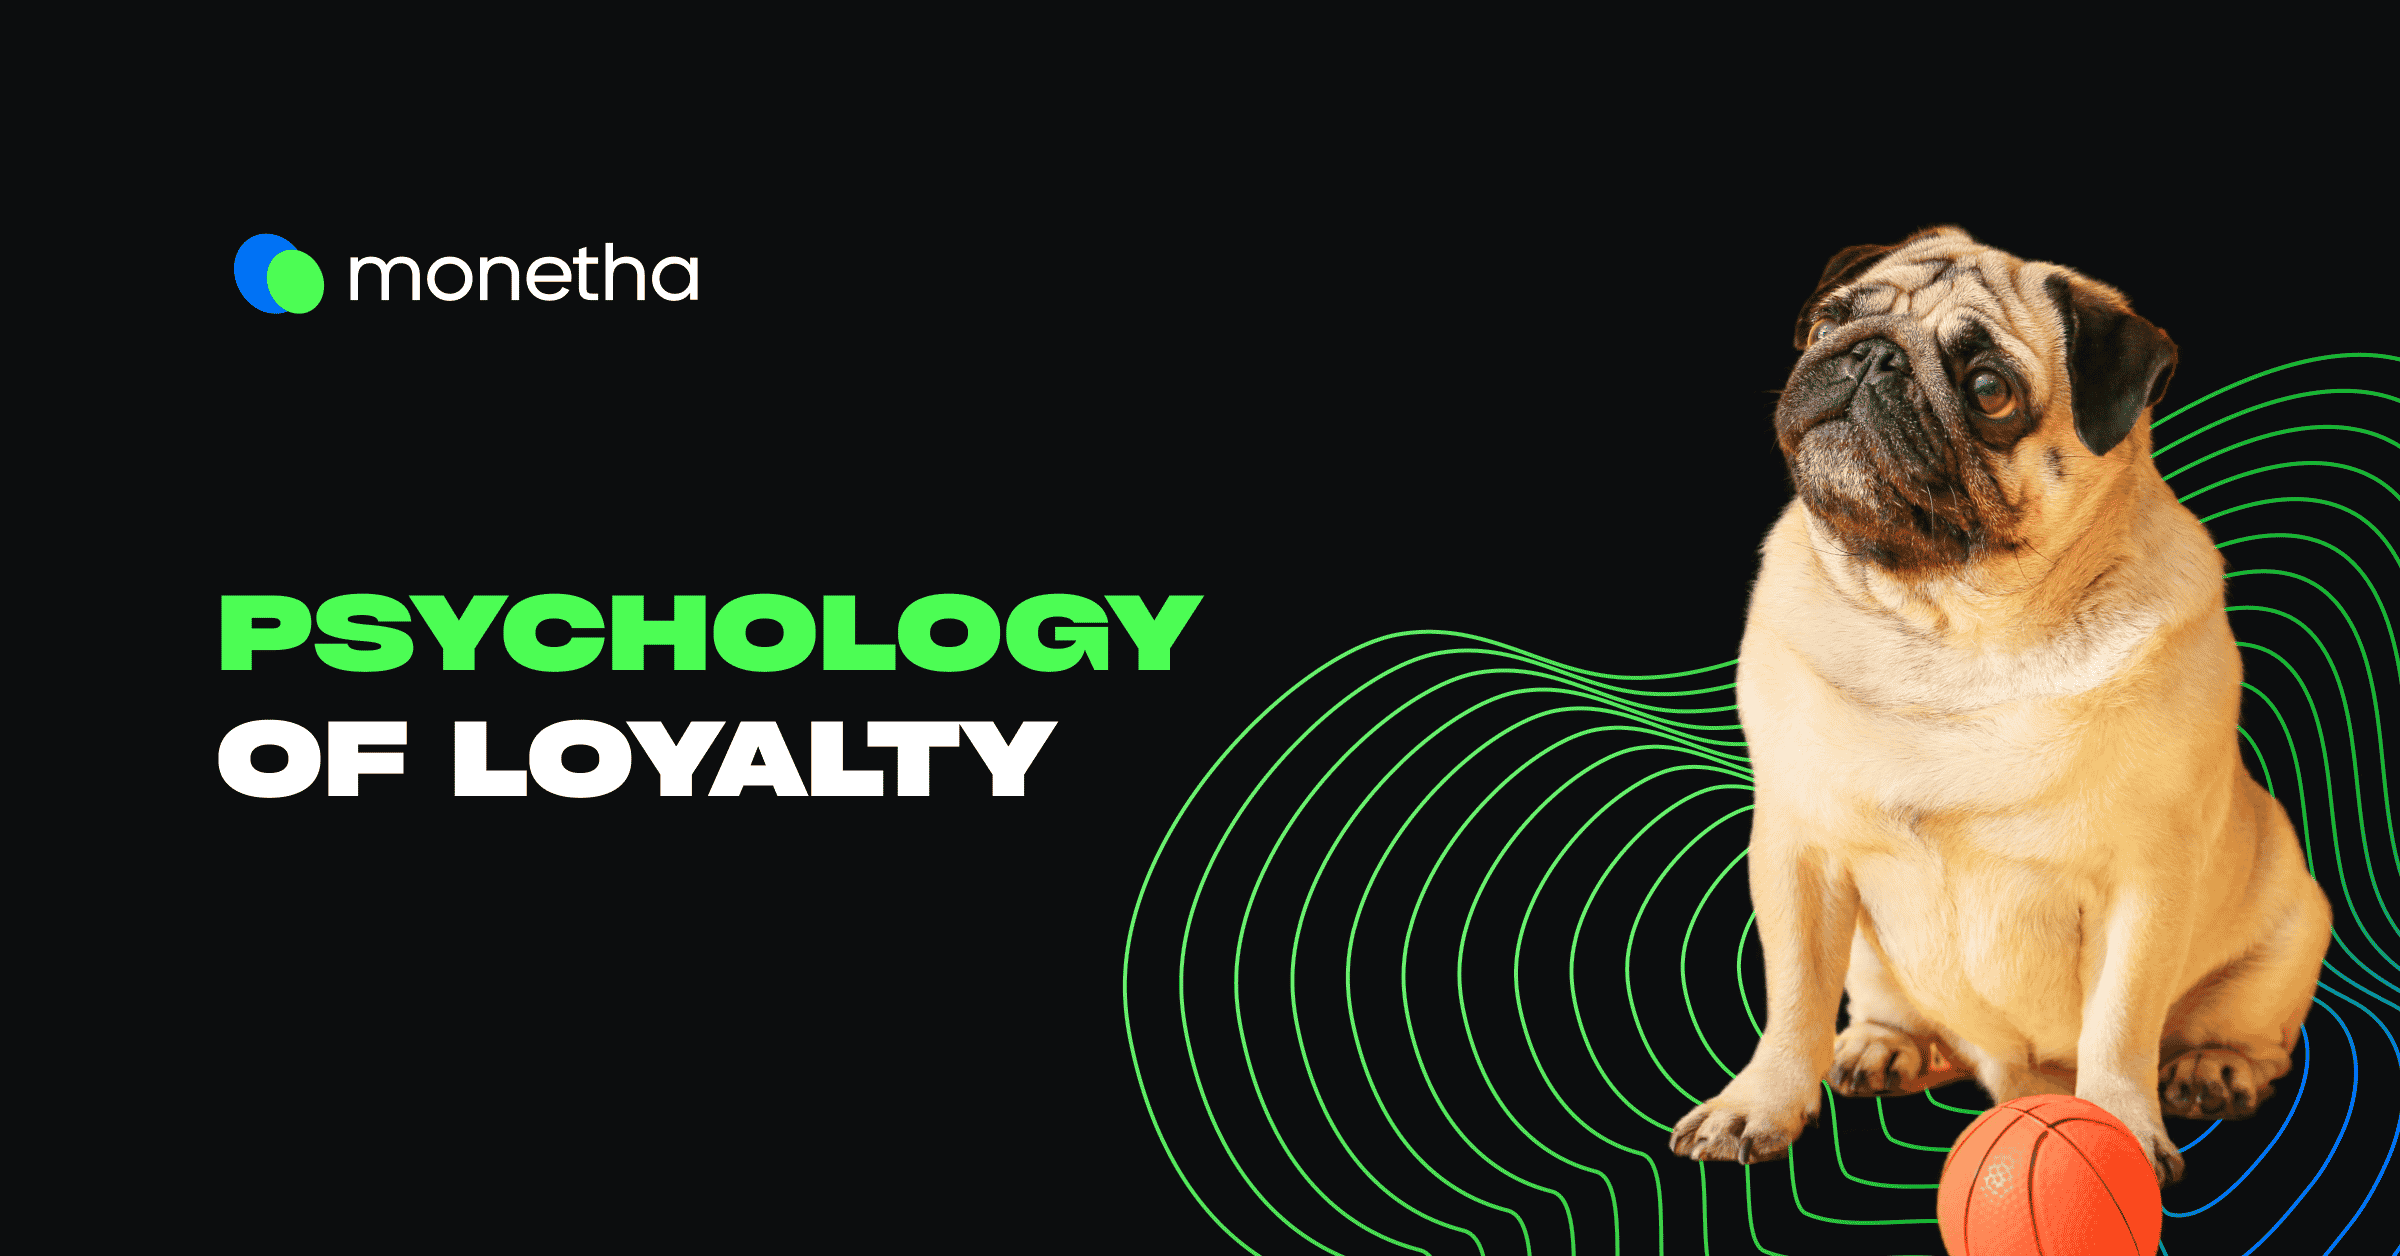 psychology of loyalty image 1